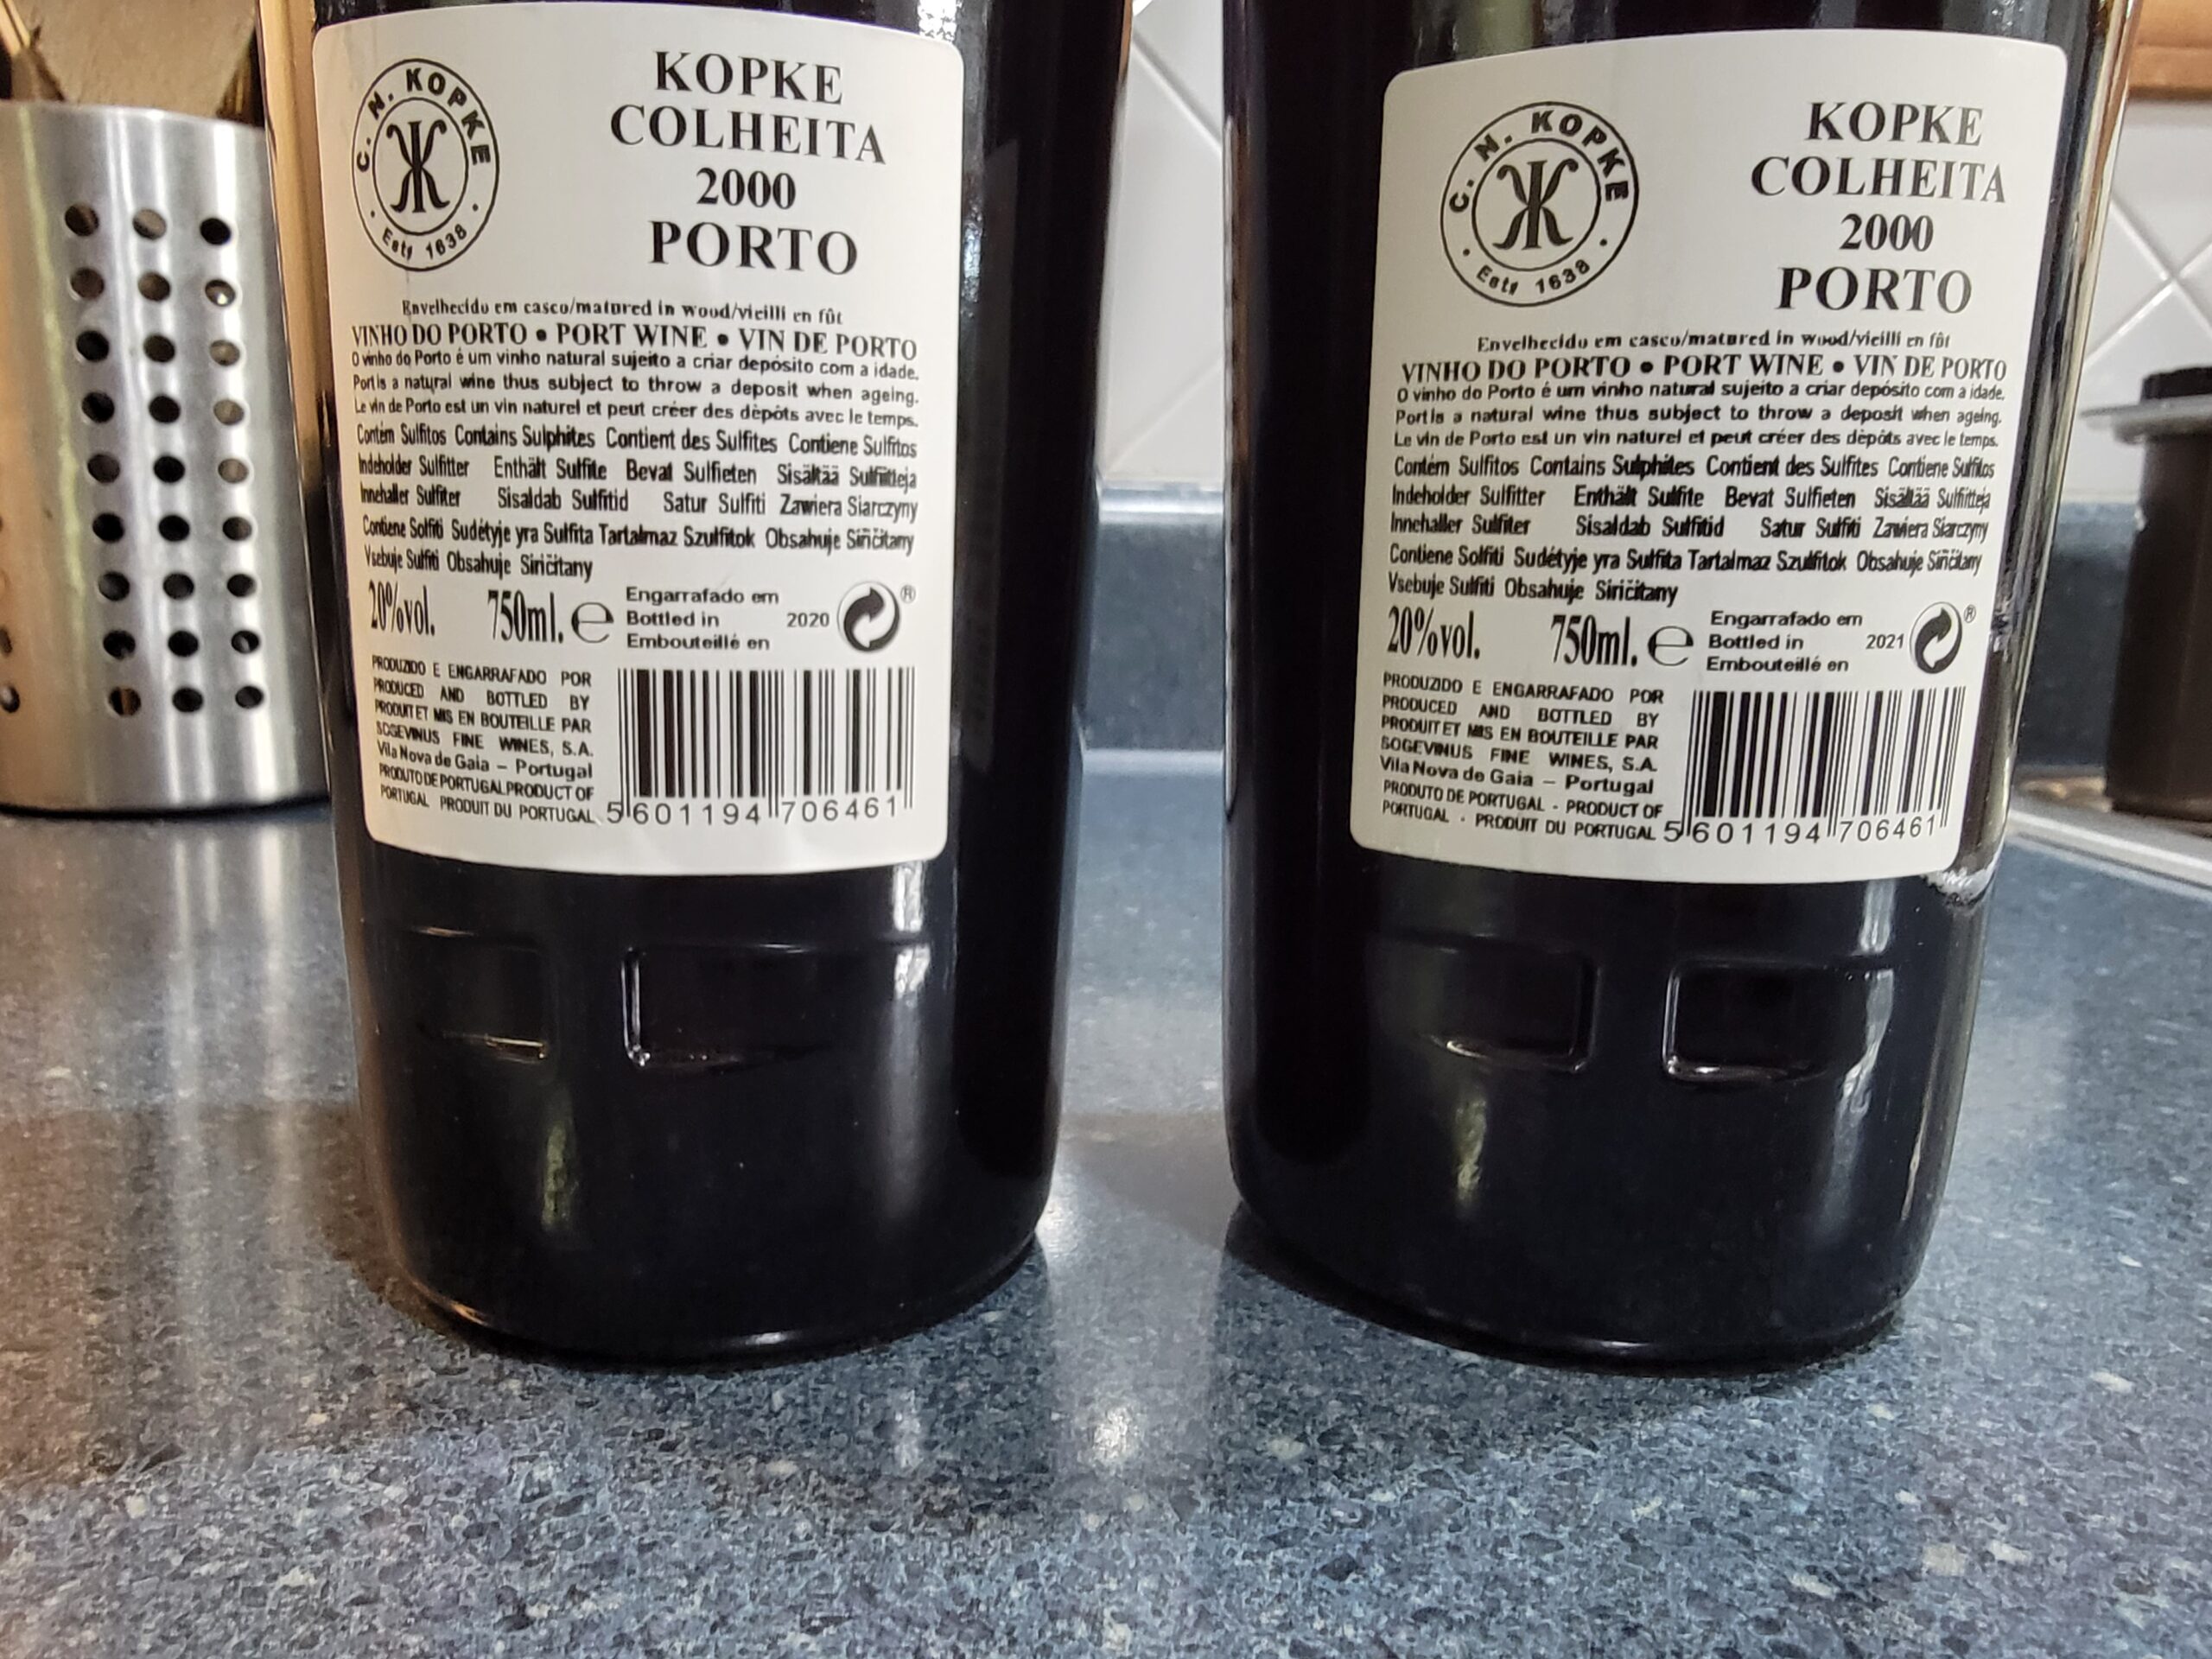 Two Kopke 2000 Colheitas Bottled in Different Years